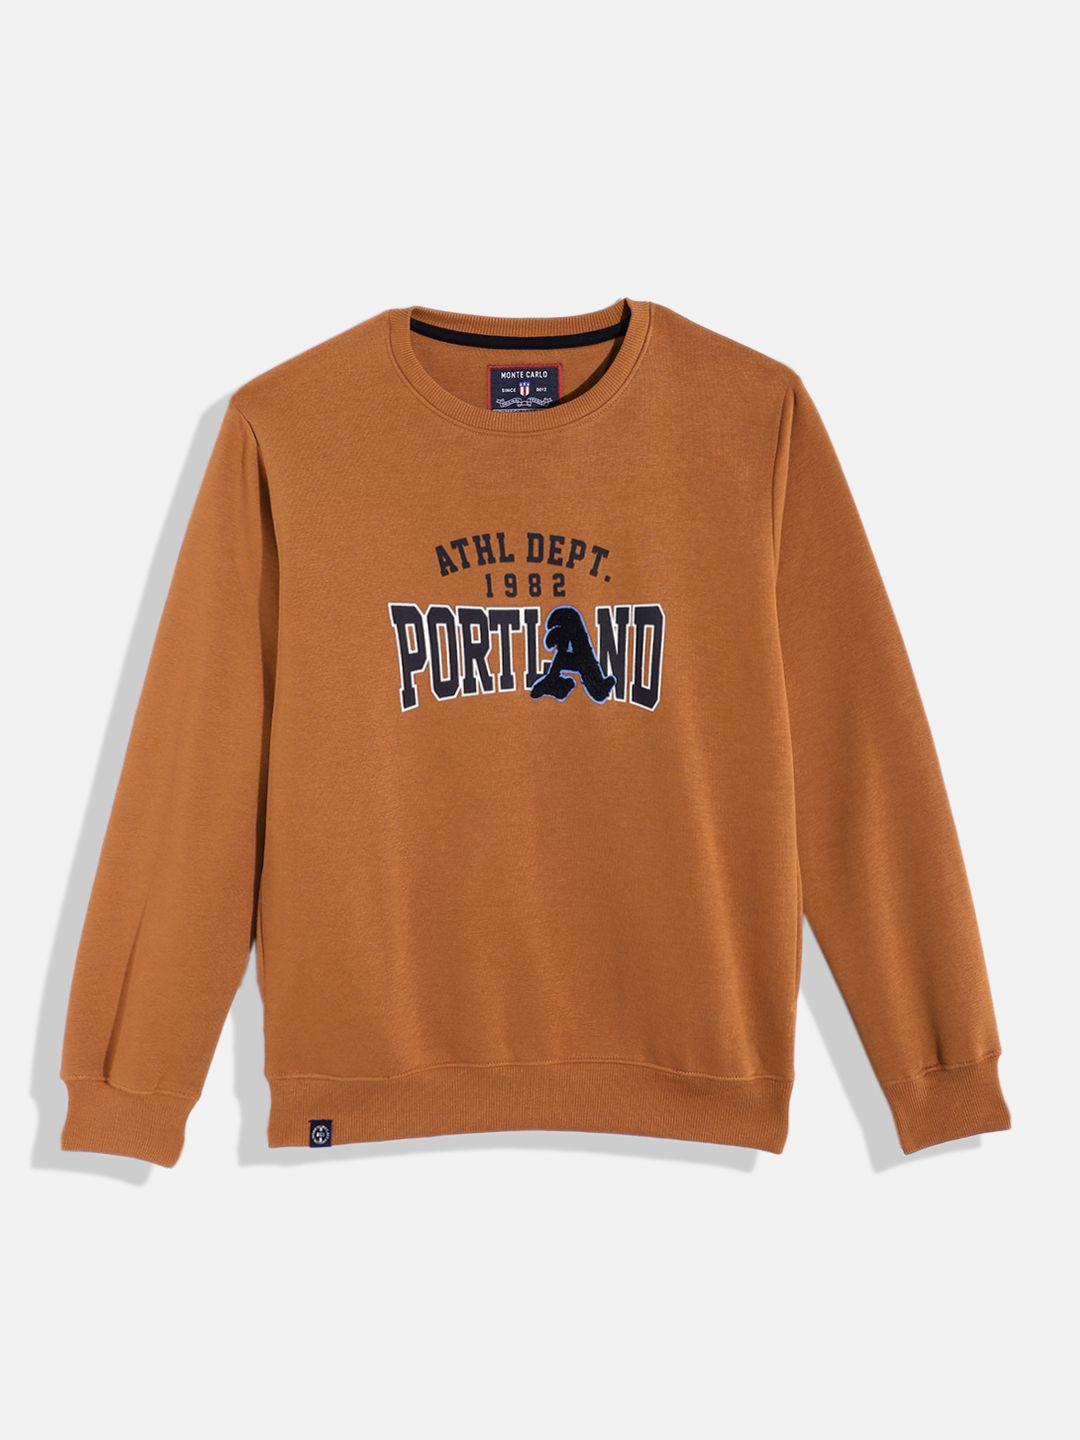 monte-carlo-teen-boys-printed-sweatshirt